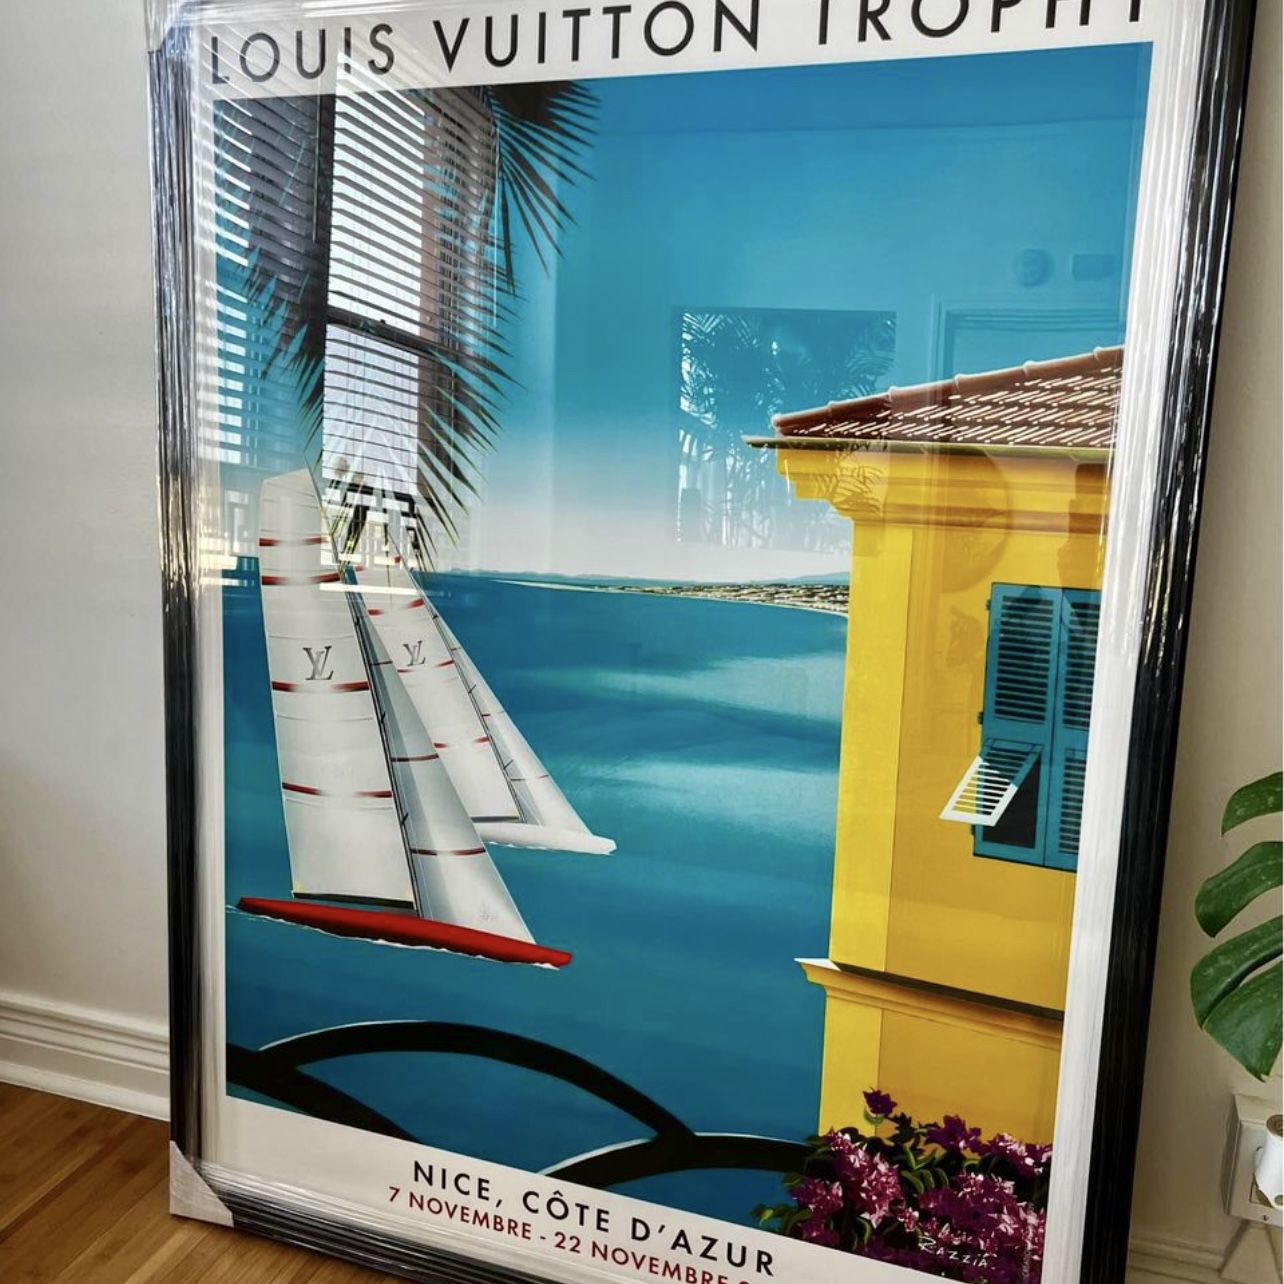 Louis Vuitton Trophy - Dubai - 2010 large poster by Razzia